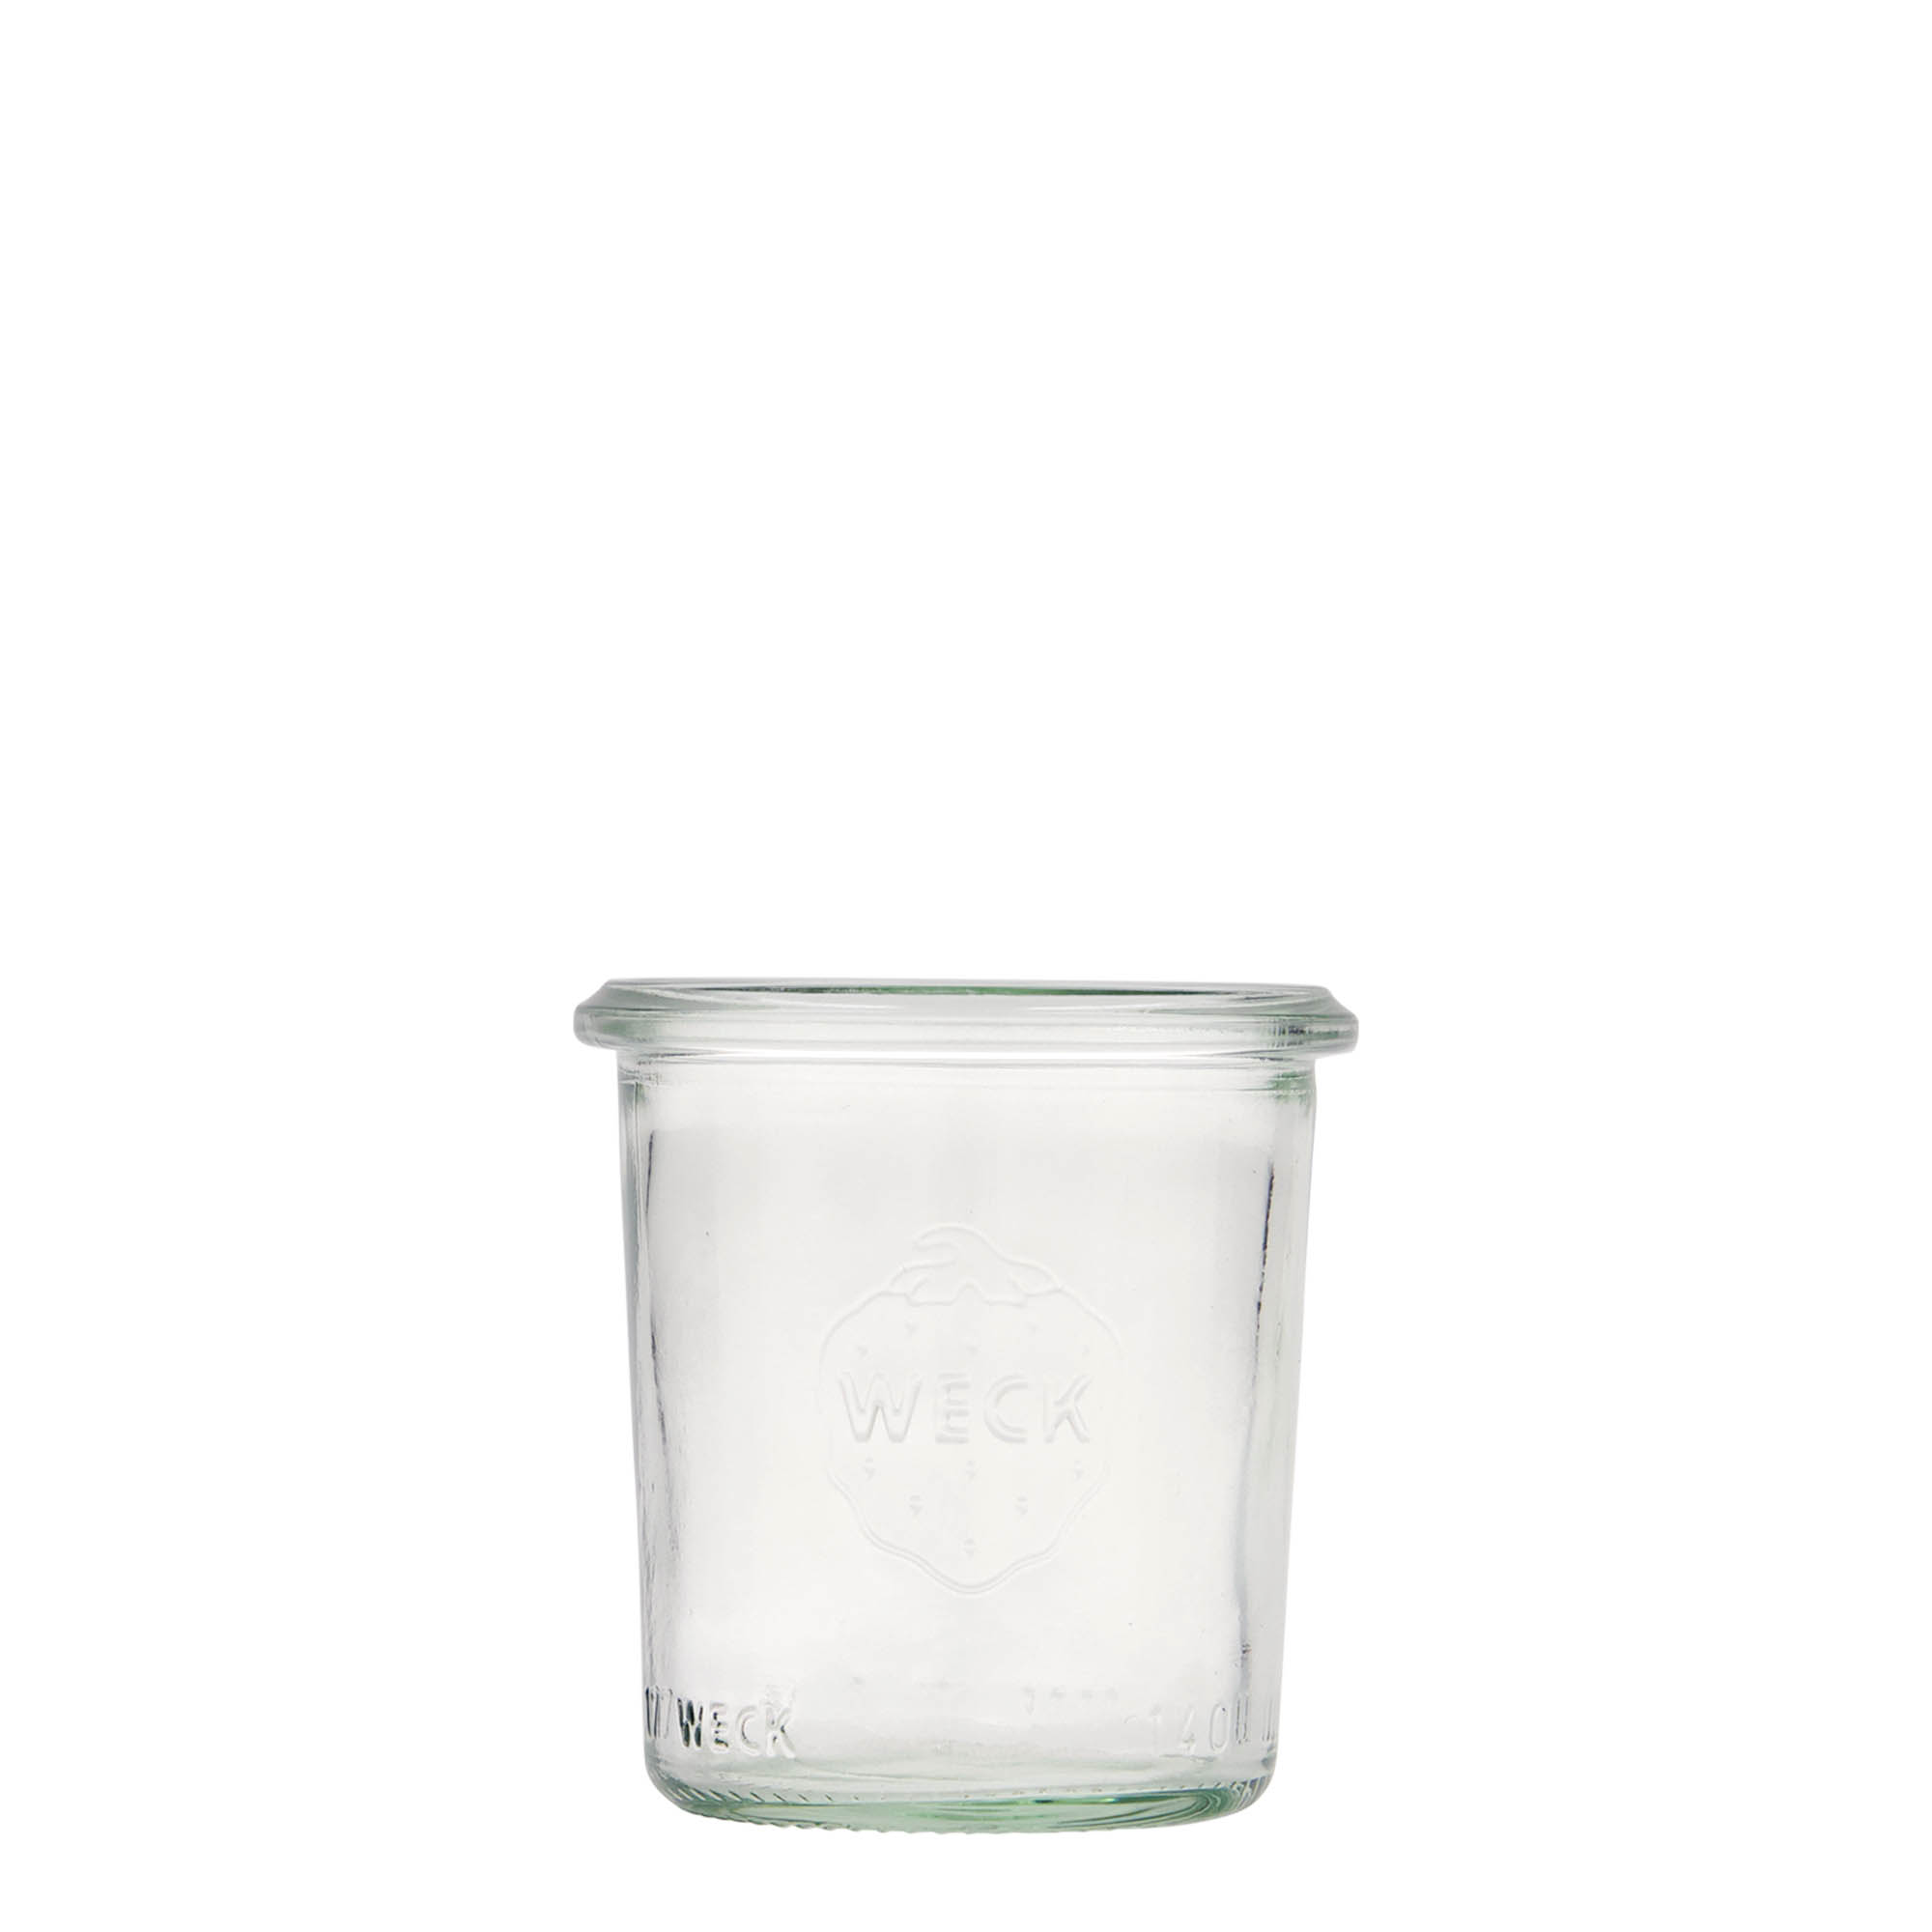 140 ml WECK cylindrical jar, closure: round rim